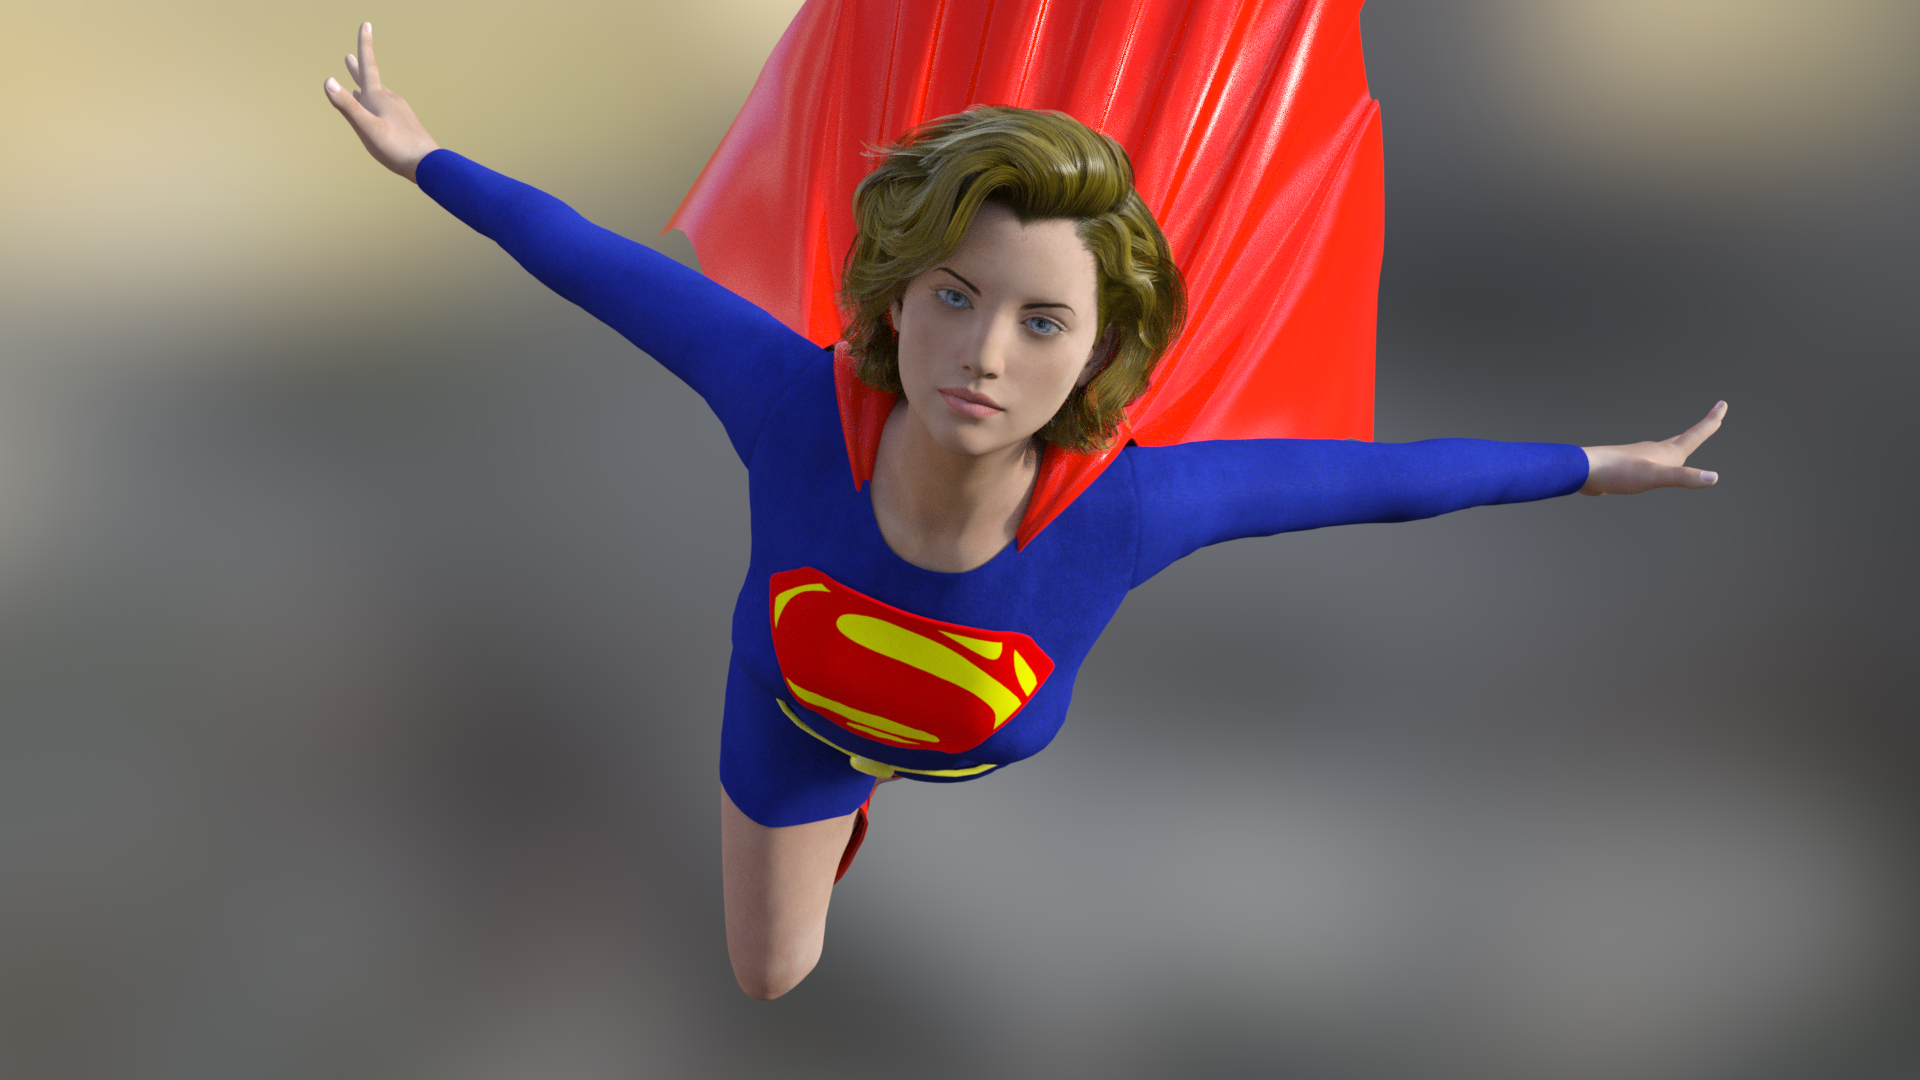 Supergirl flying by Granleon on DeviantArt 